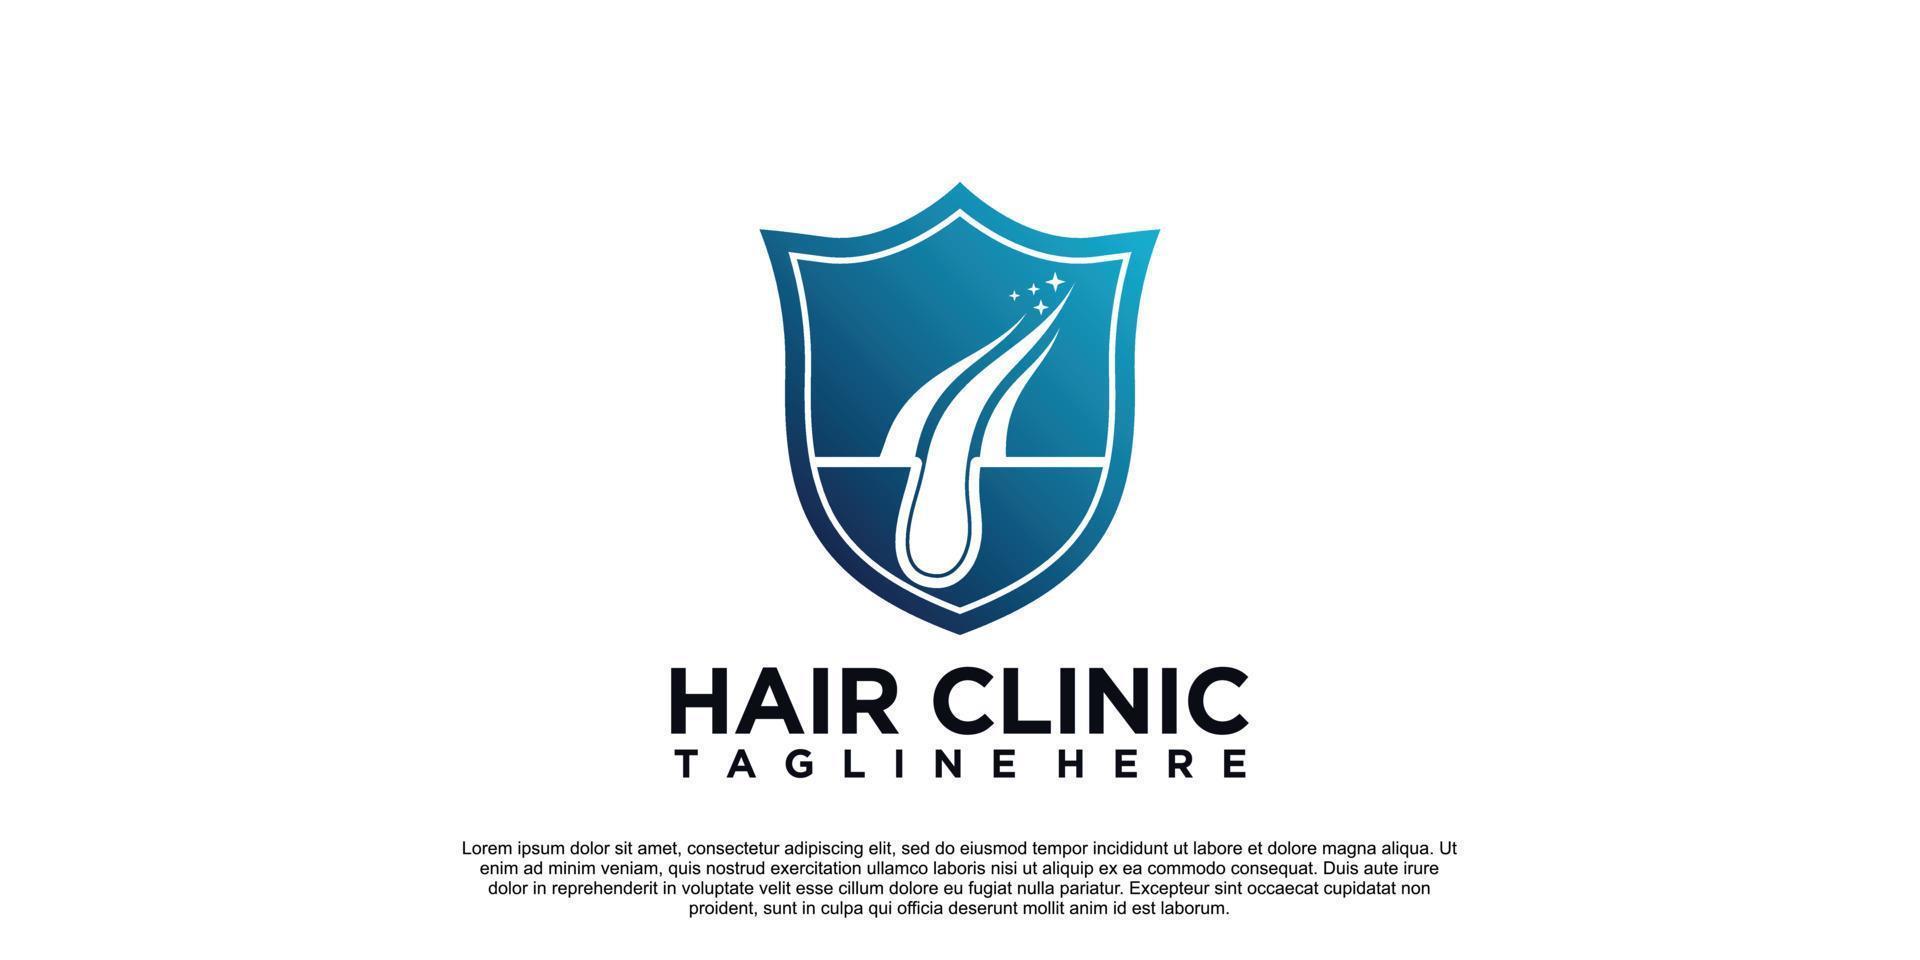 Hair clinic logo design vector with creative unique premium vector part 2